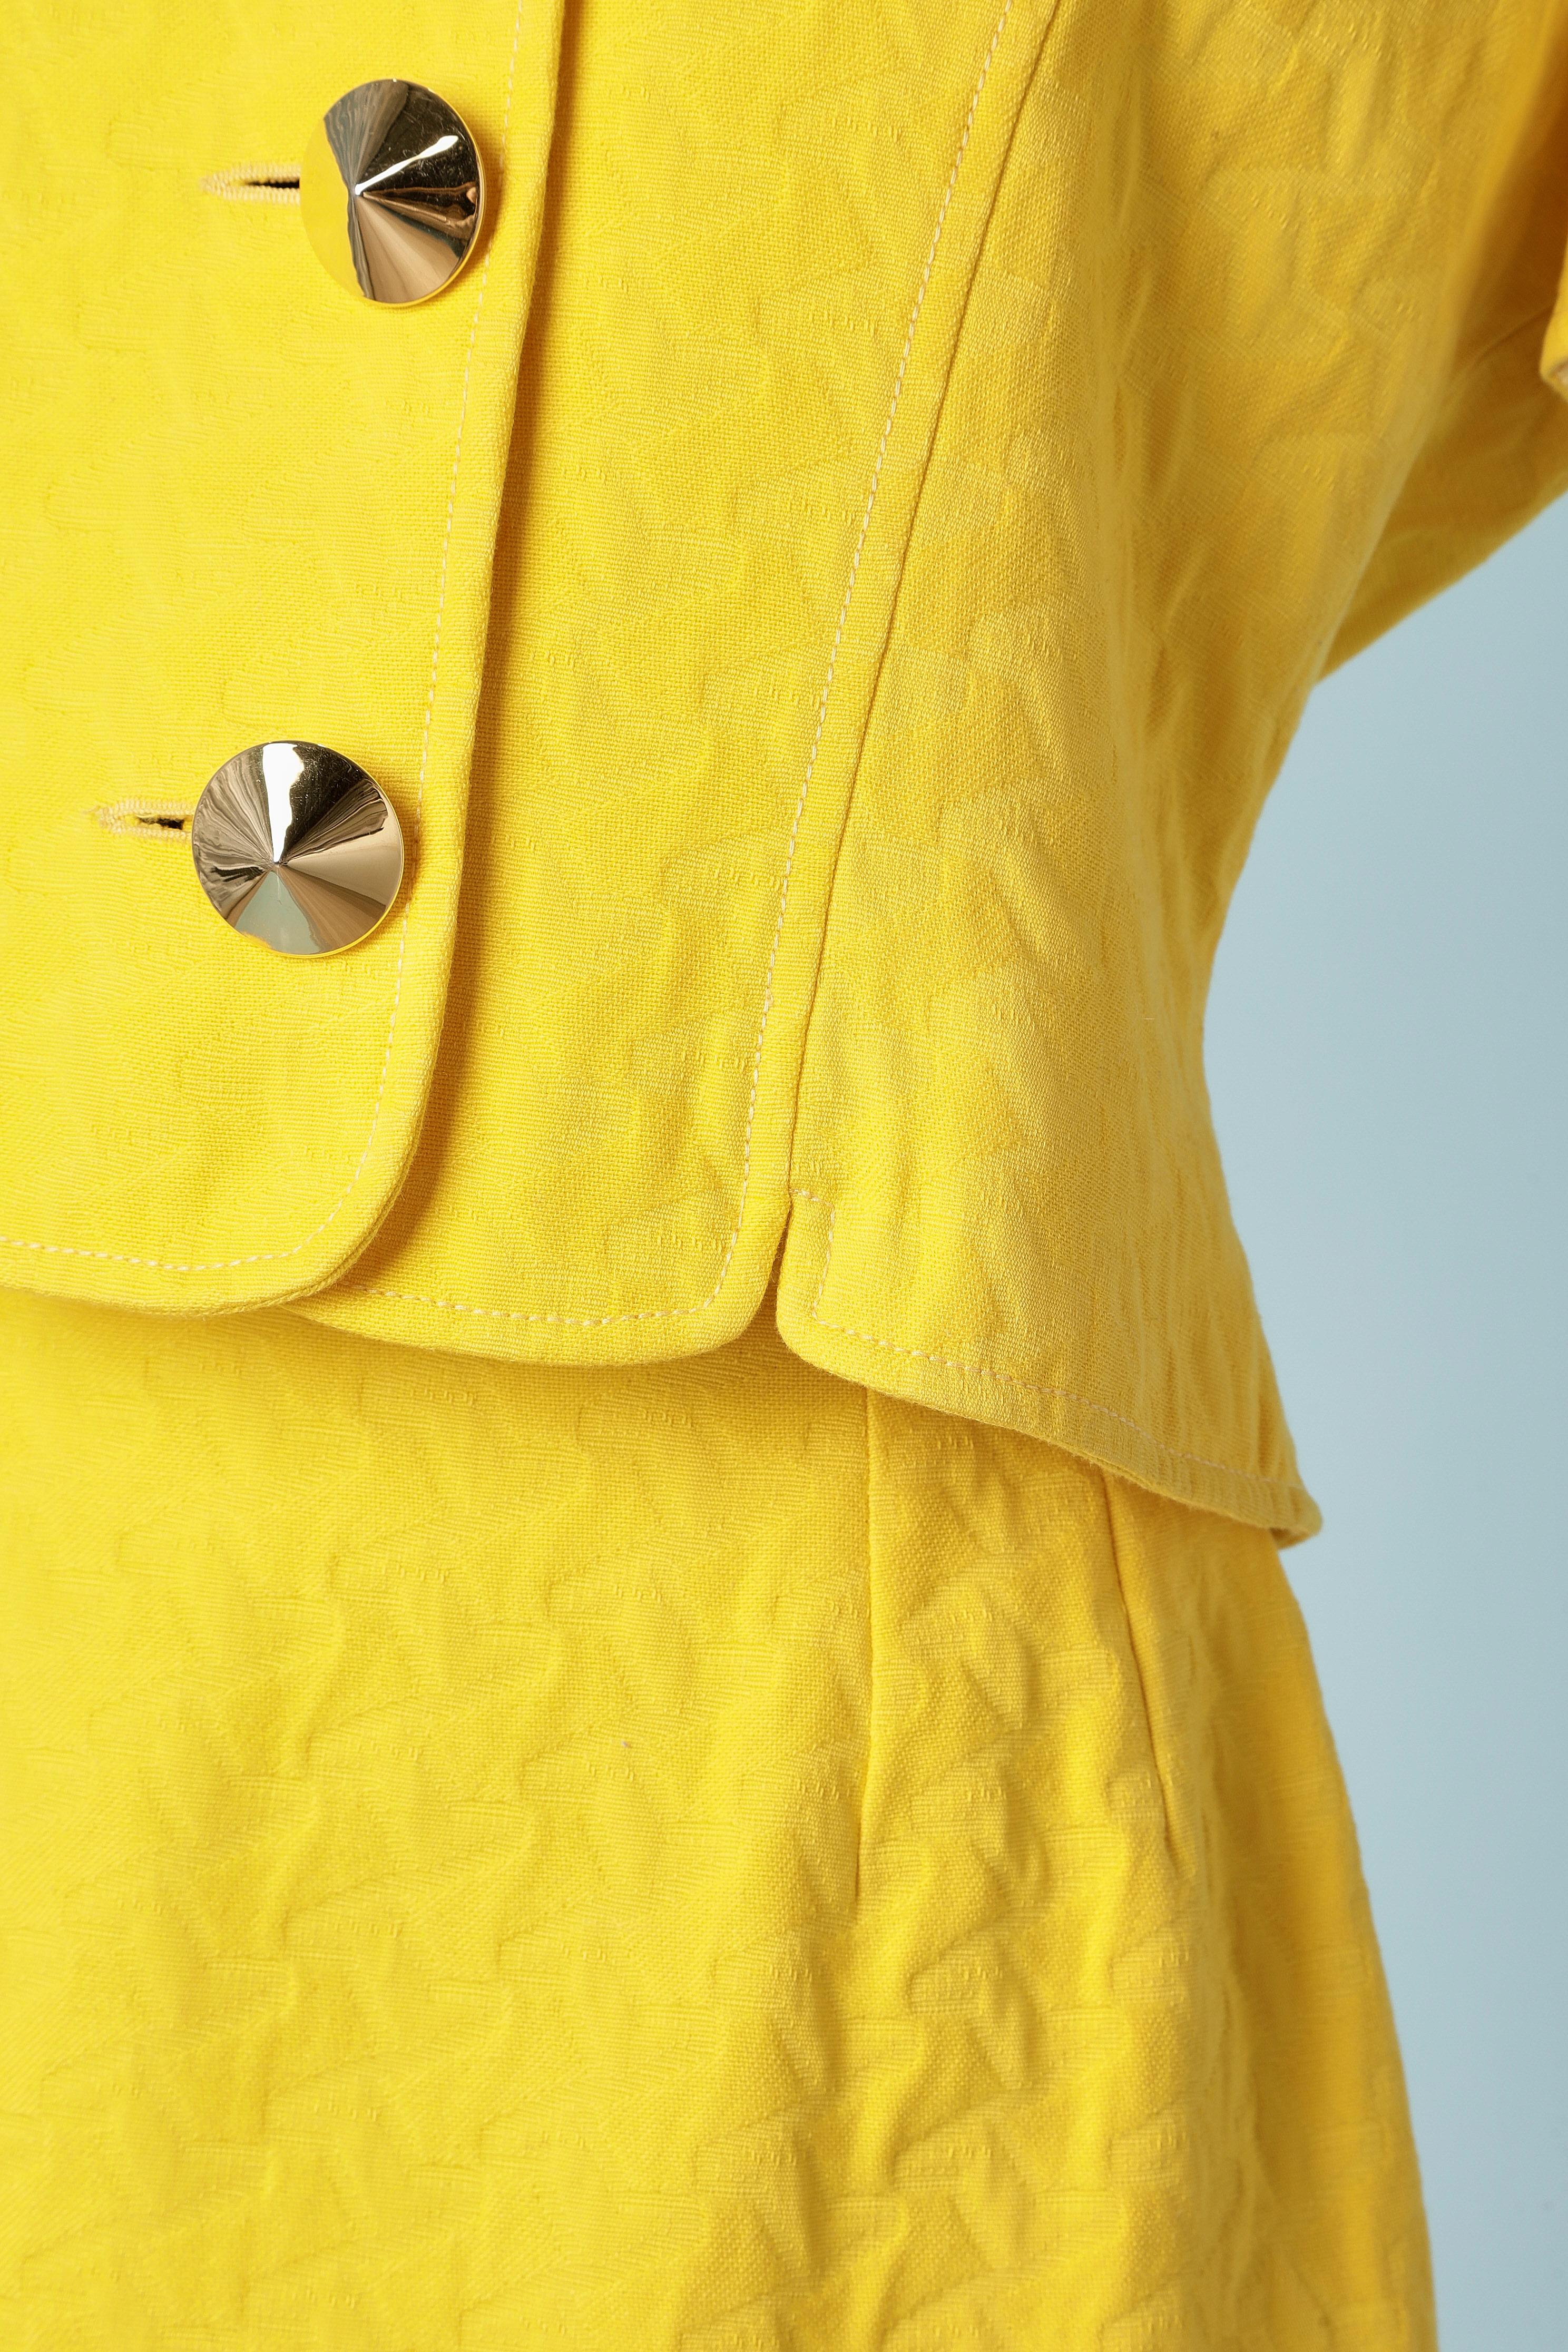 Yellow cotton jacquard skirt-suit with gold metal buttons Jacques Heim  In Excellent Condition For Sale In Saint-Ouen-Sur-Seine, FR